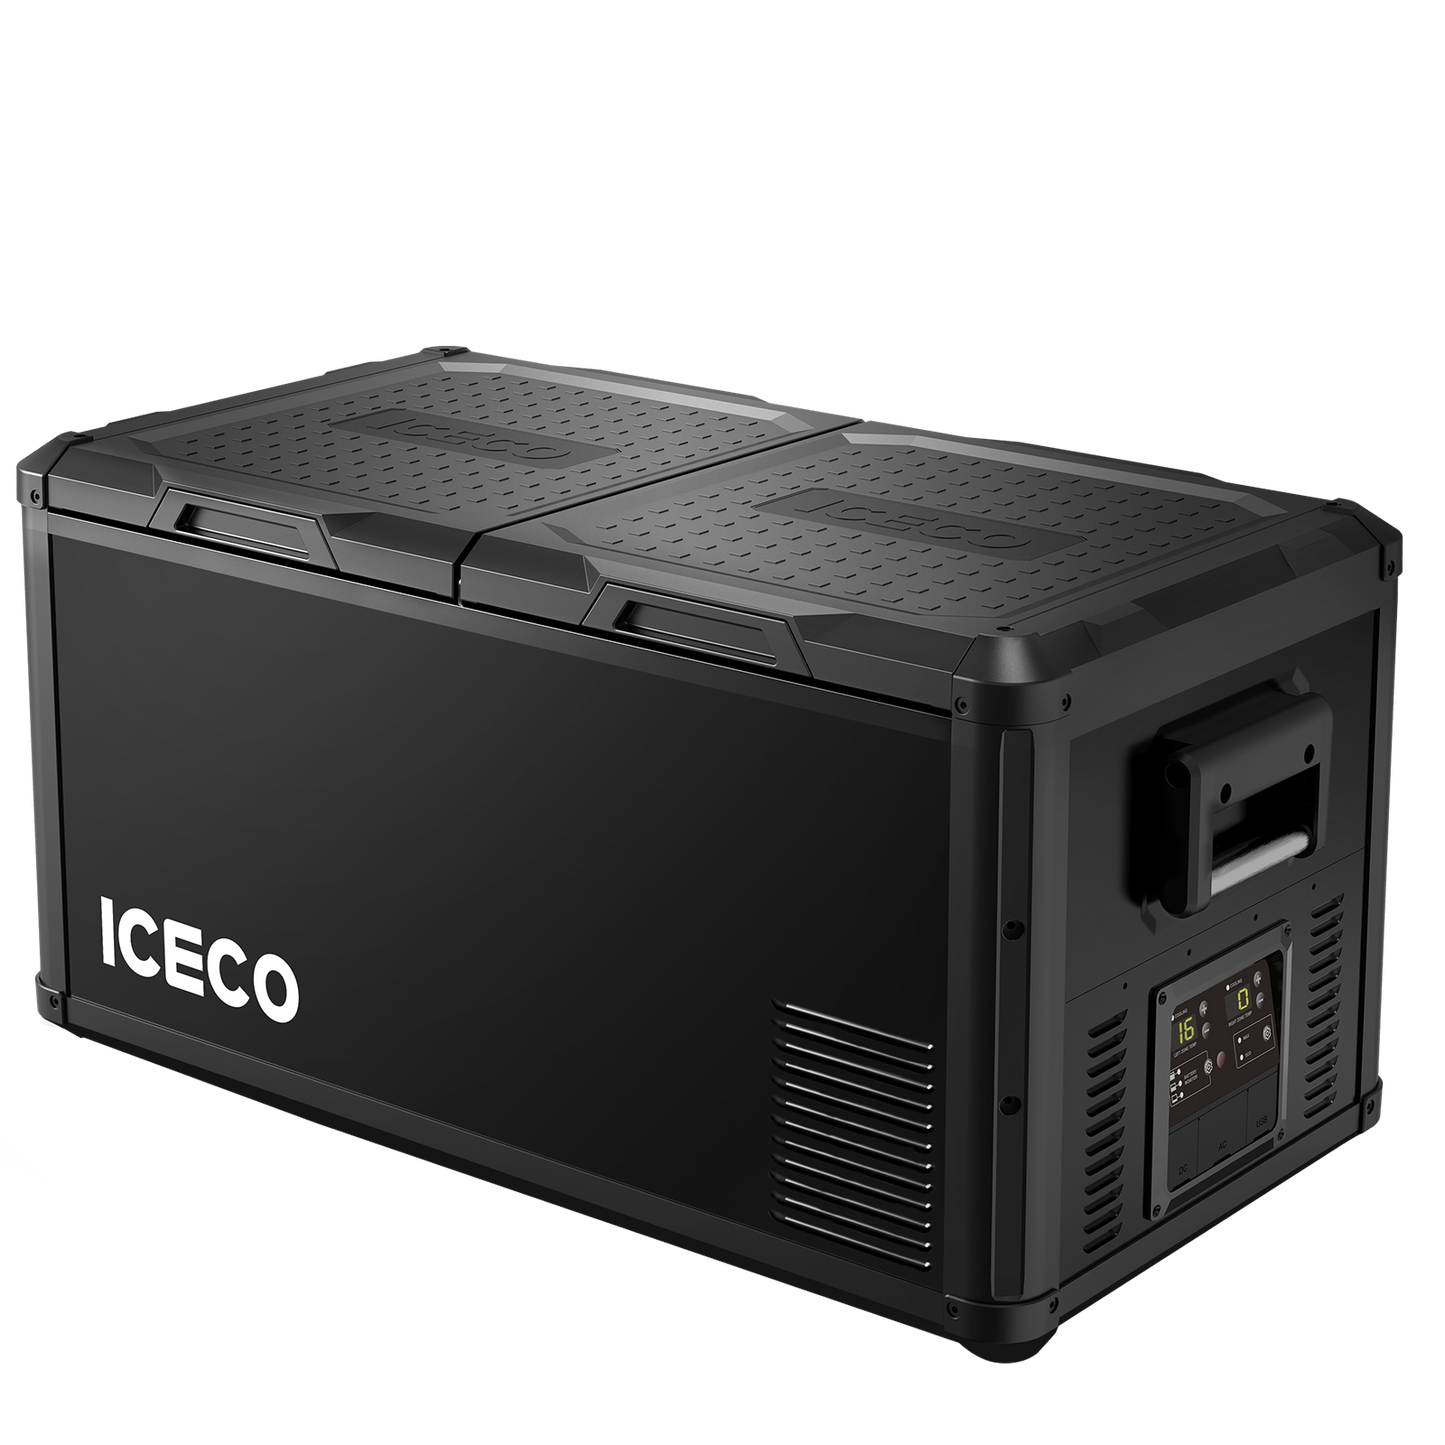 ICECO VL75ProD 75L 12V Portable Fridge Freezer